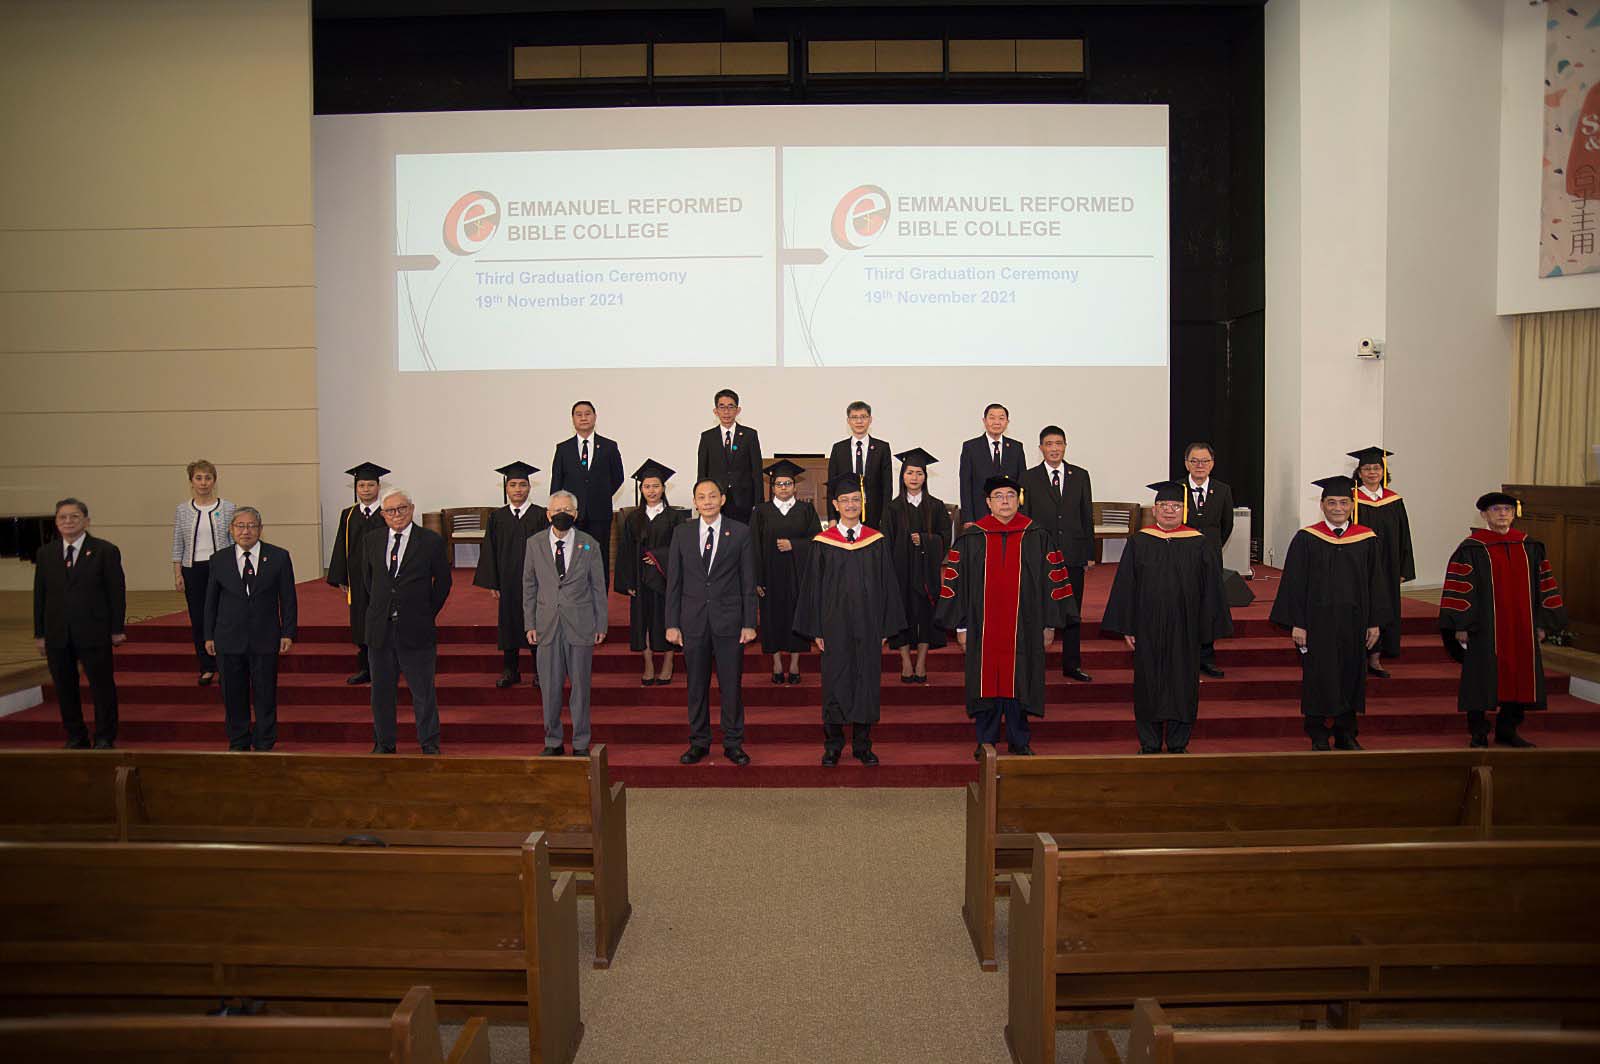 Third Graduation Ceremony on 19 November 2021